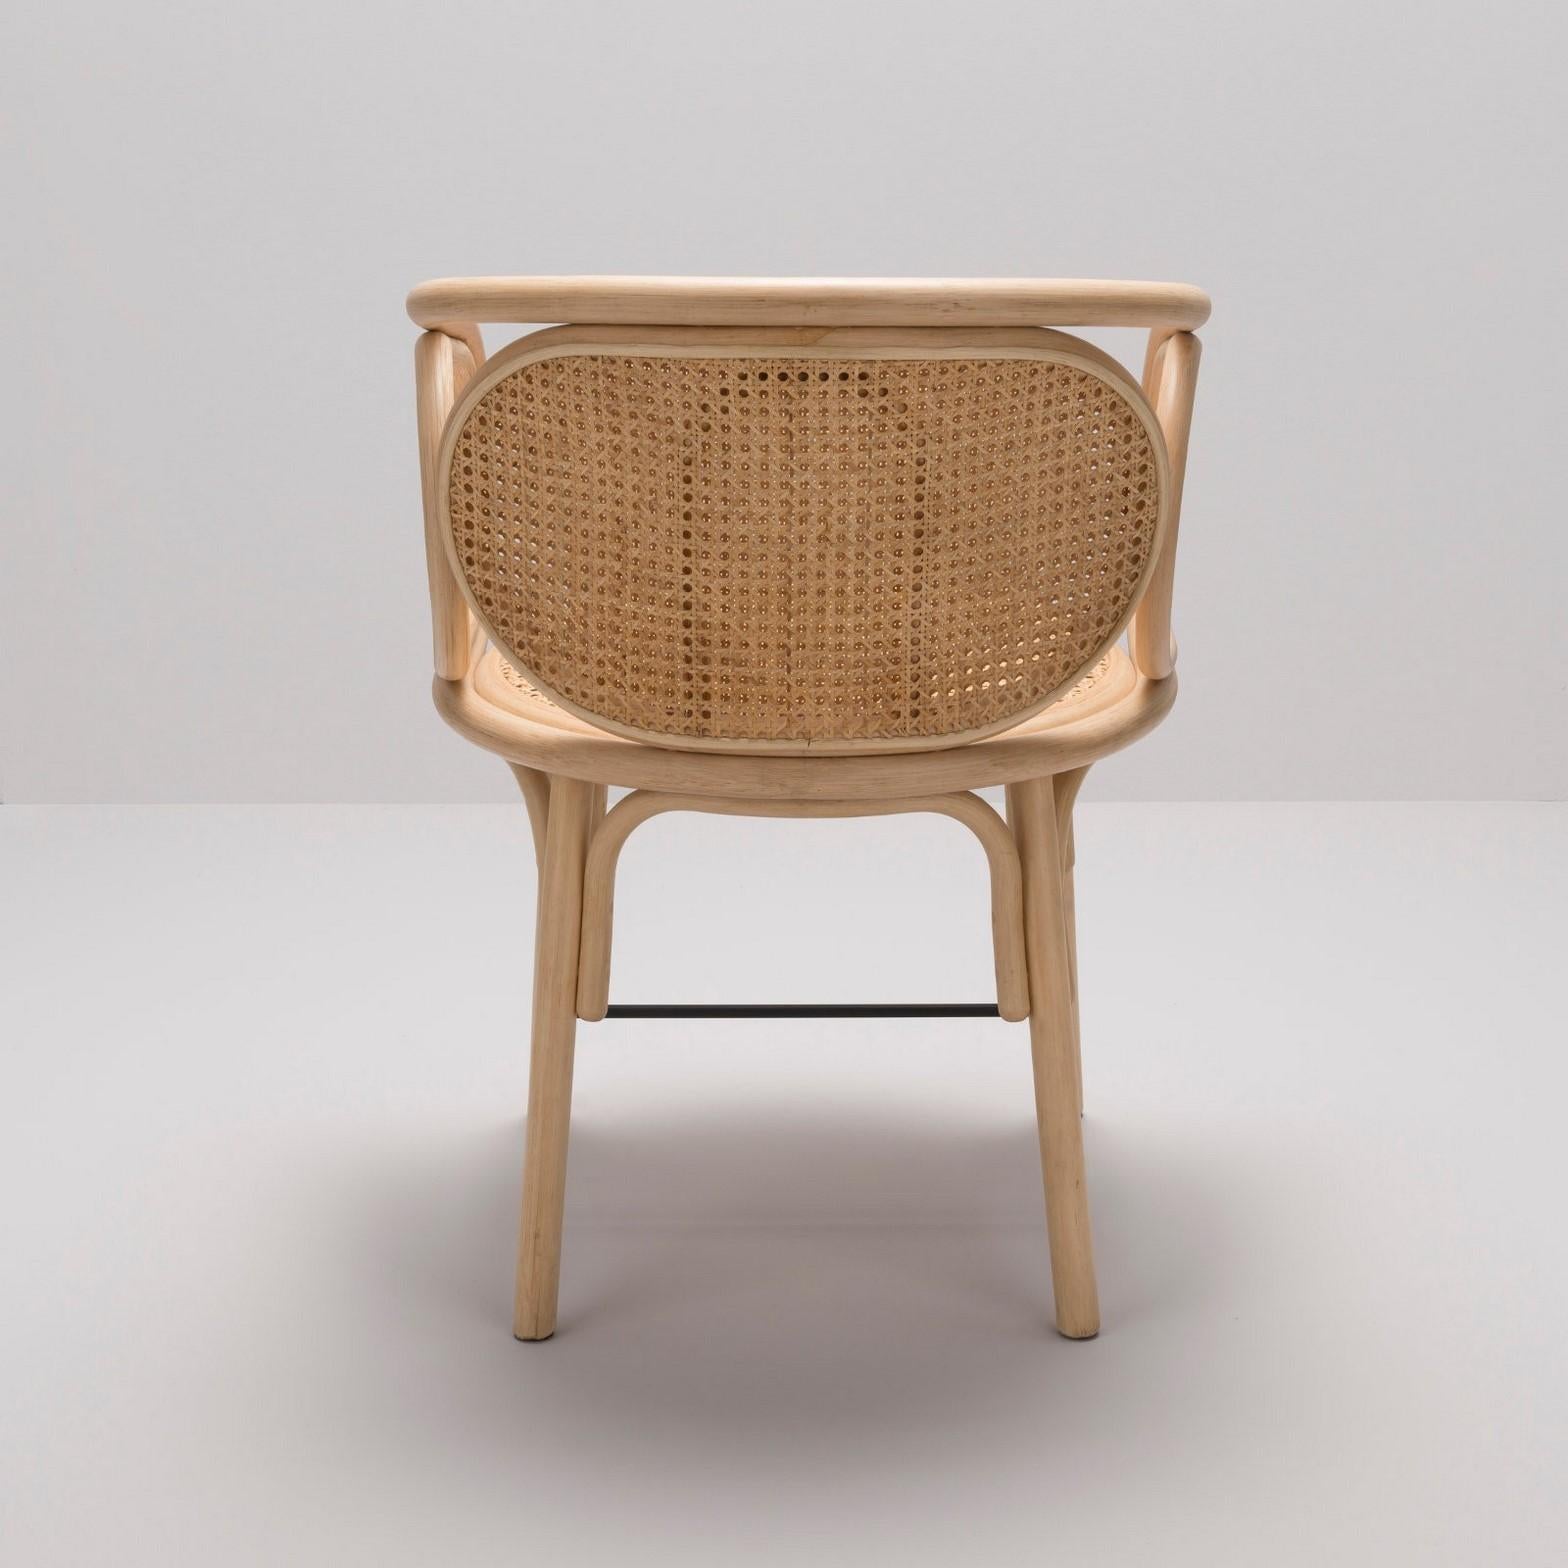 woven cane chair